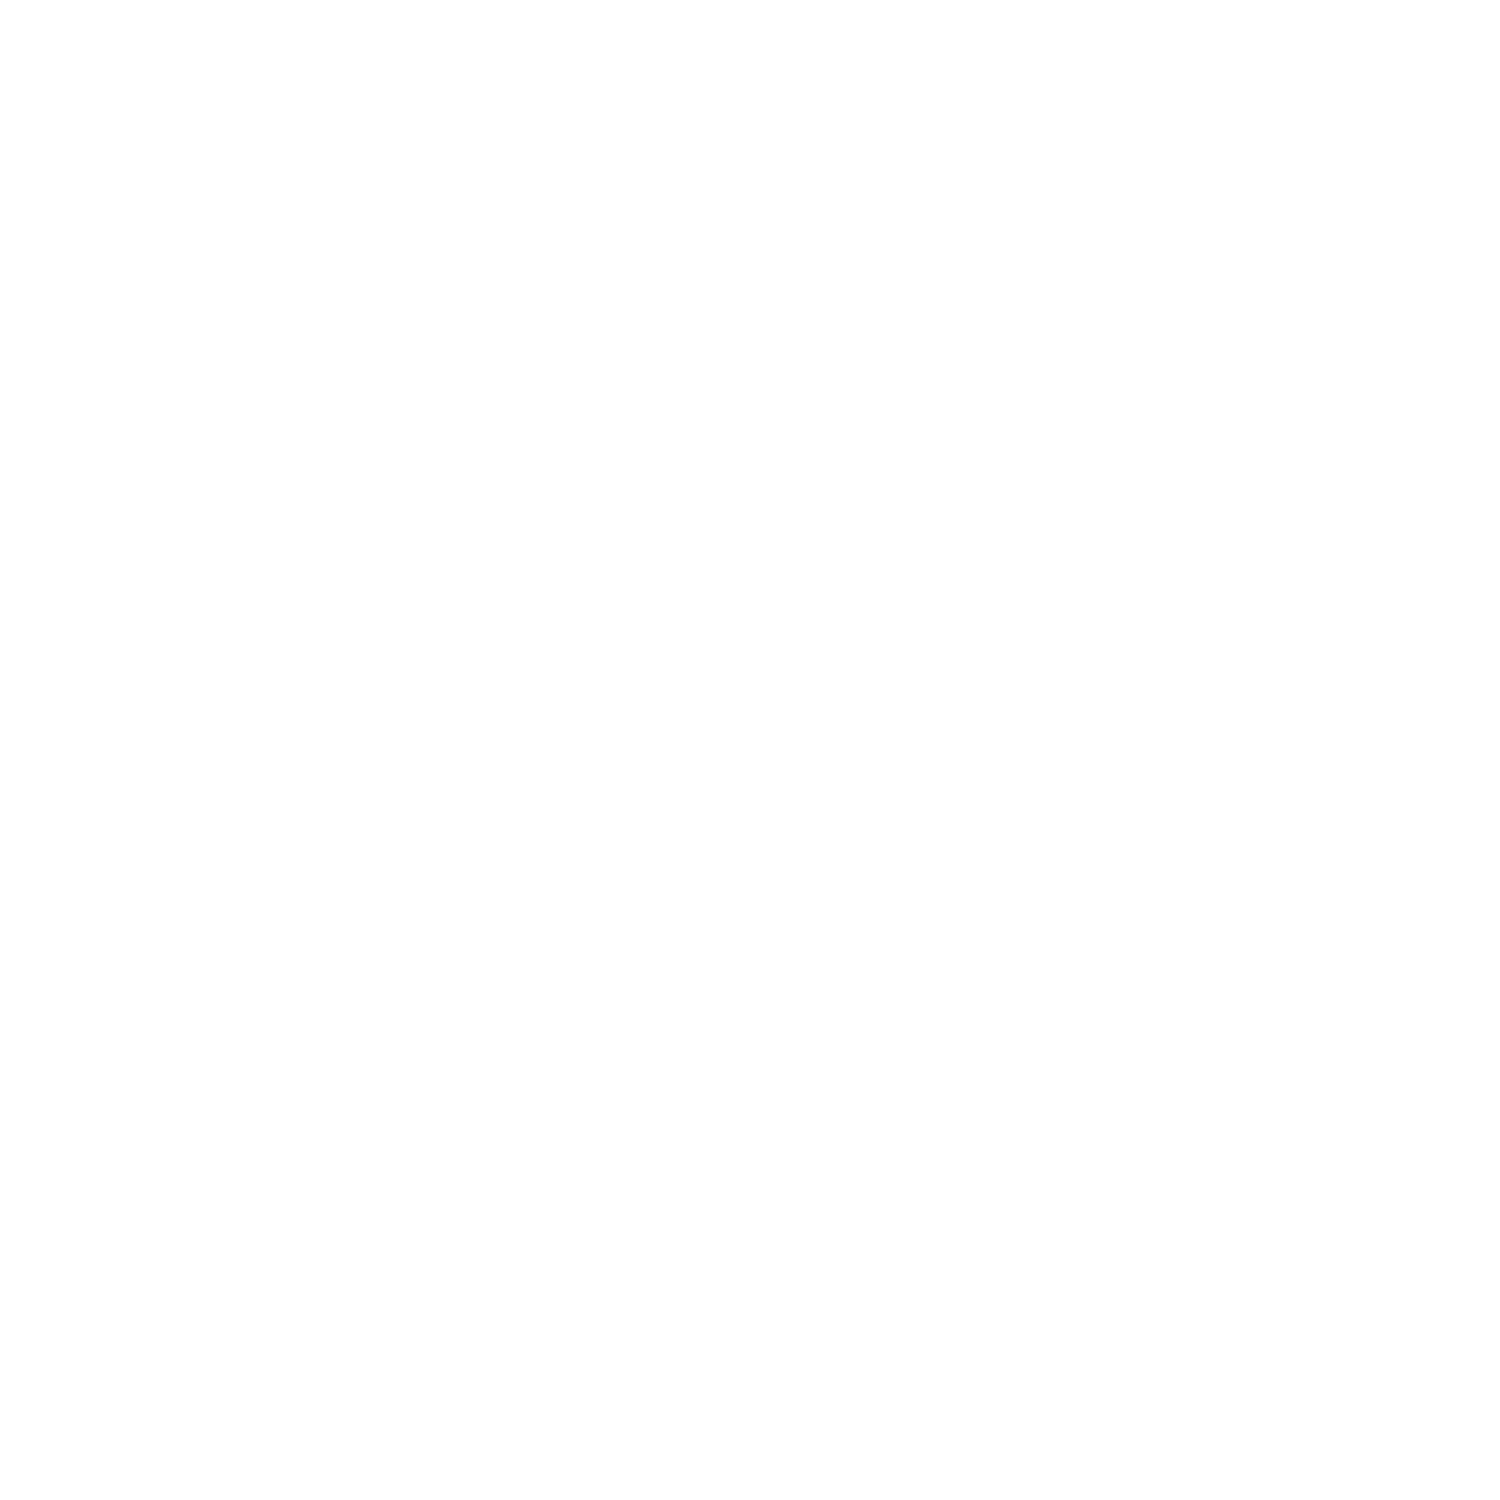 California Consumers for Fair Legal Funding